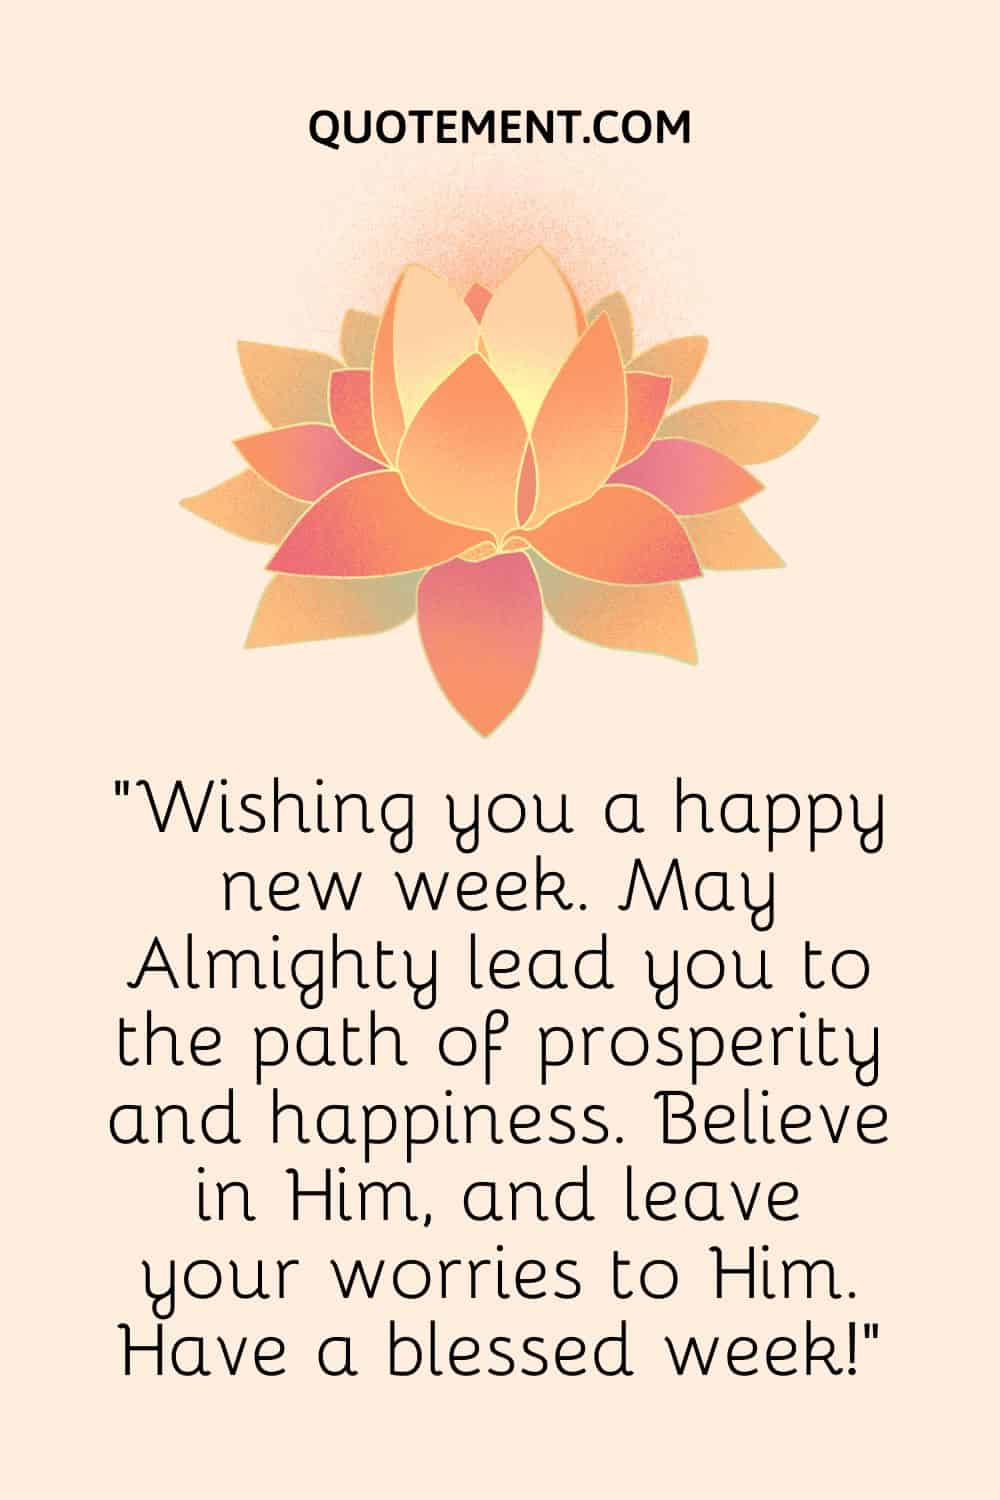 Wishing you a happy new week